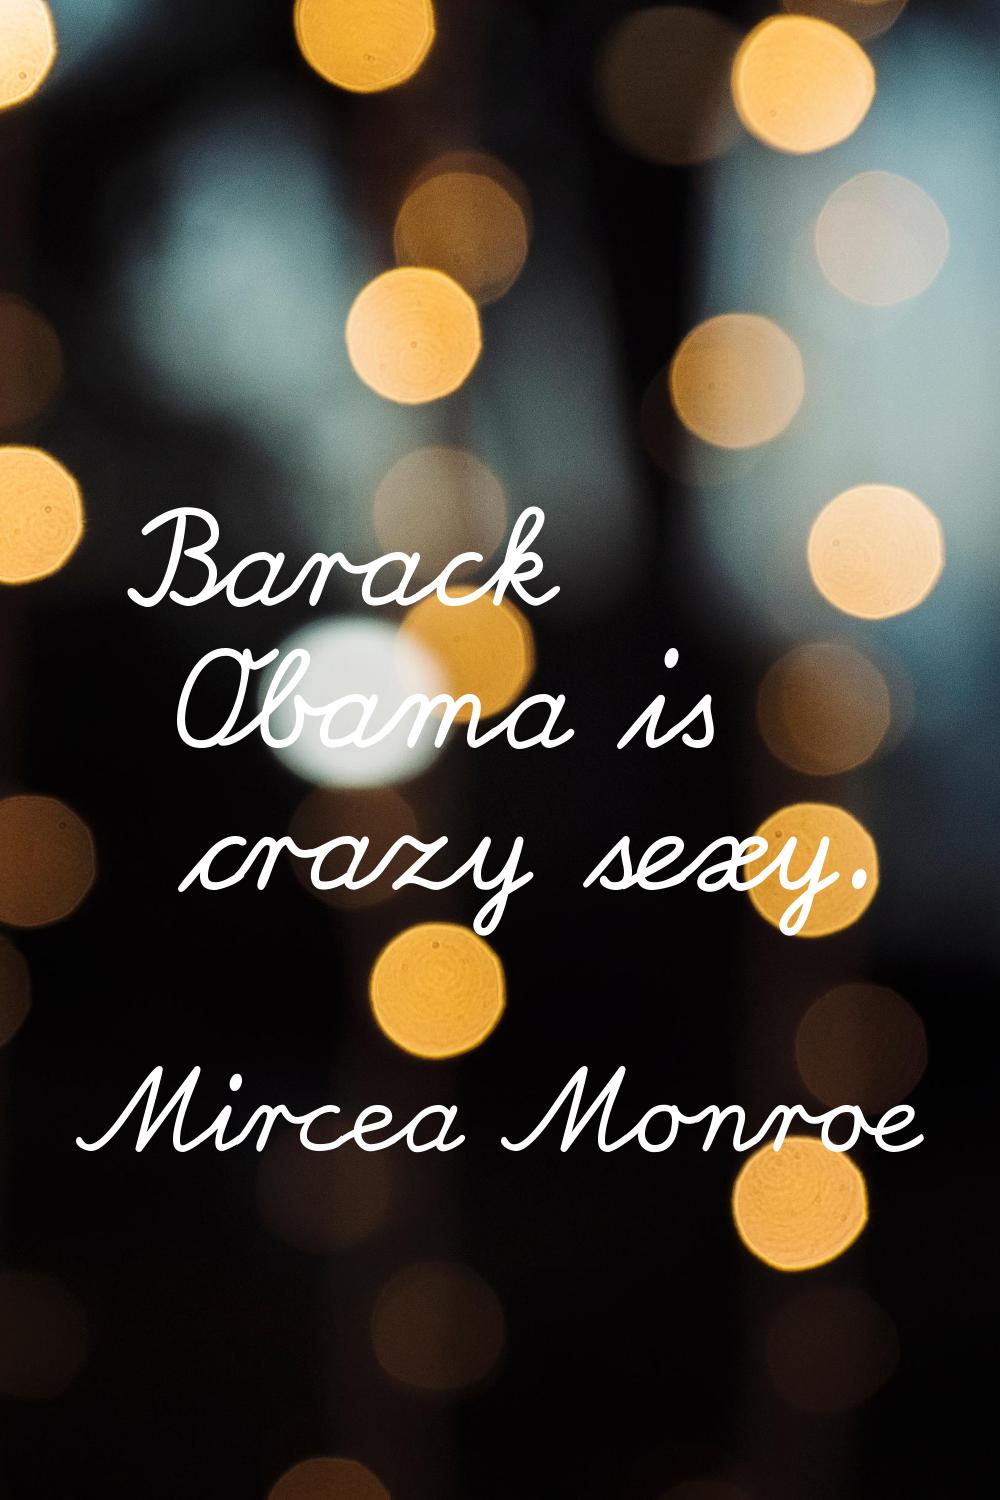 Barack Obama is crazy sexy.